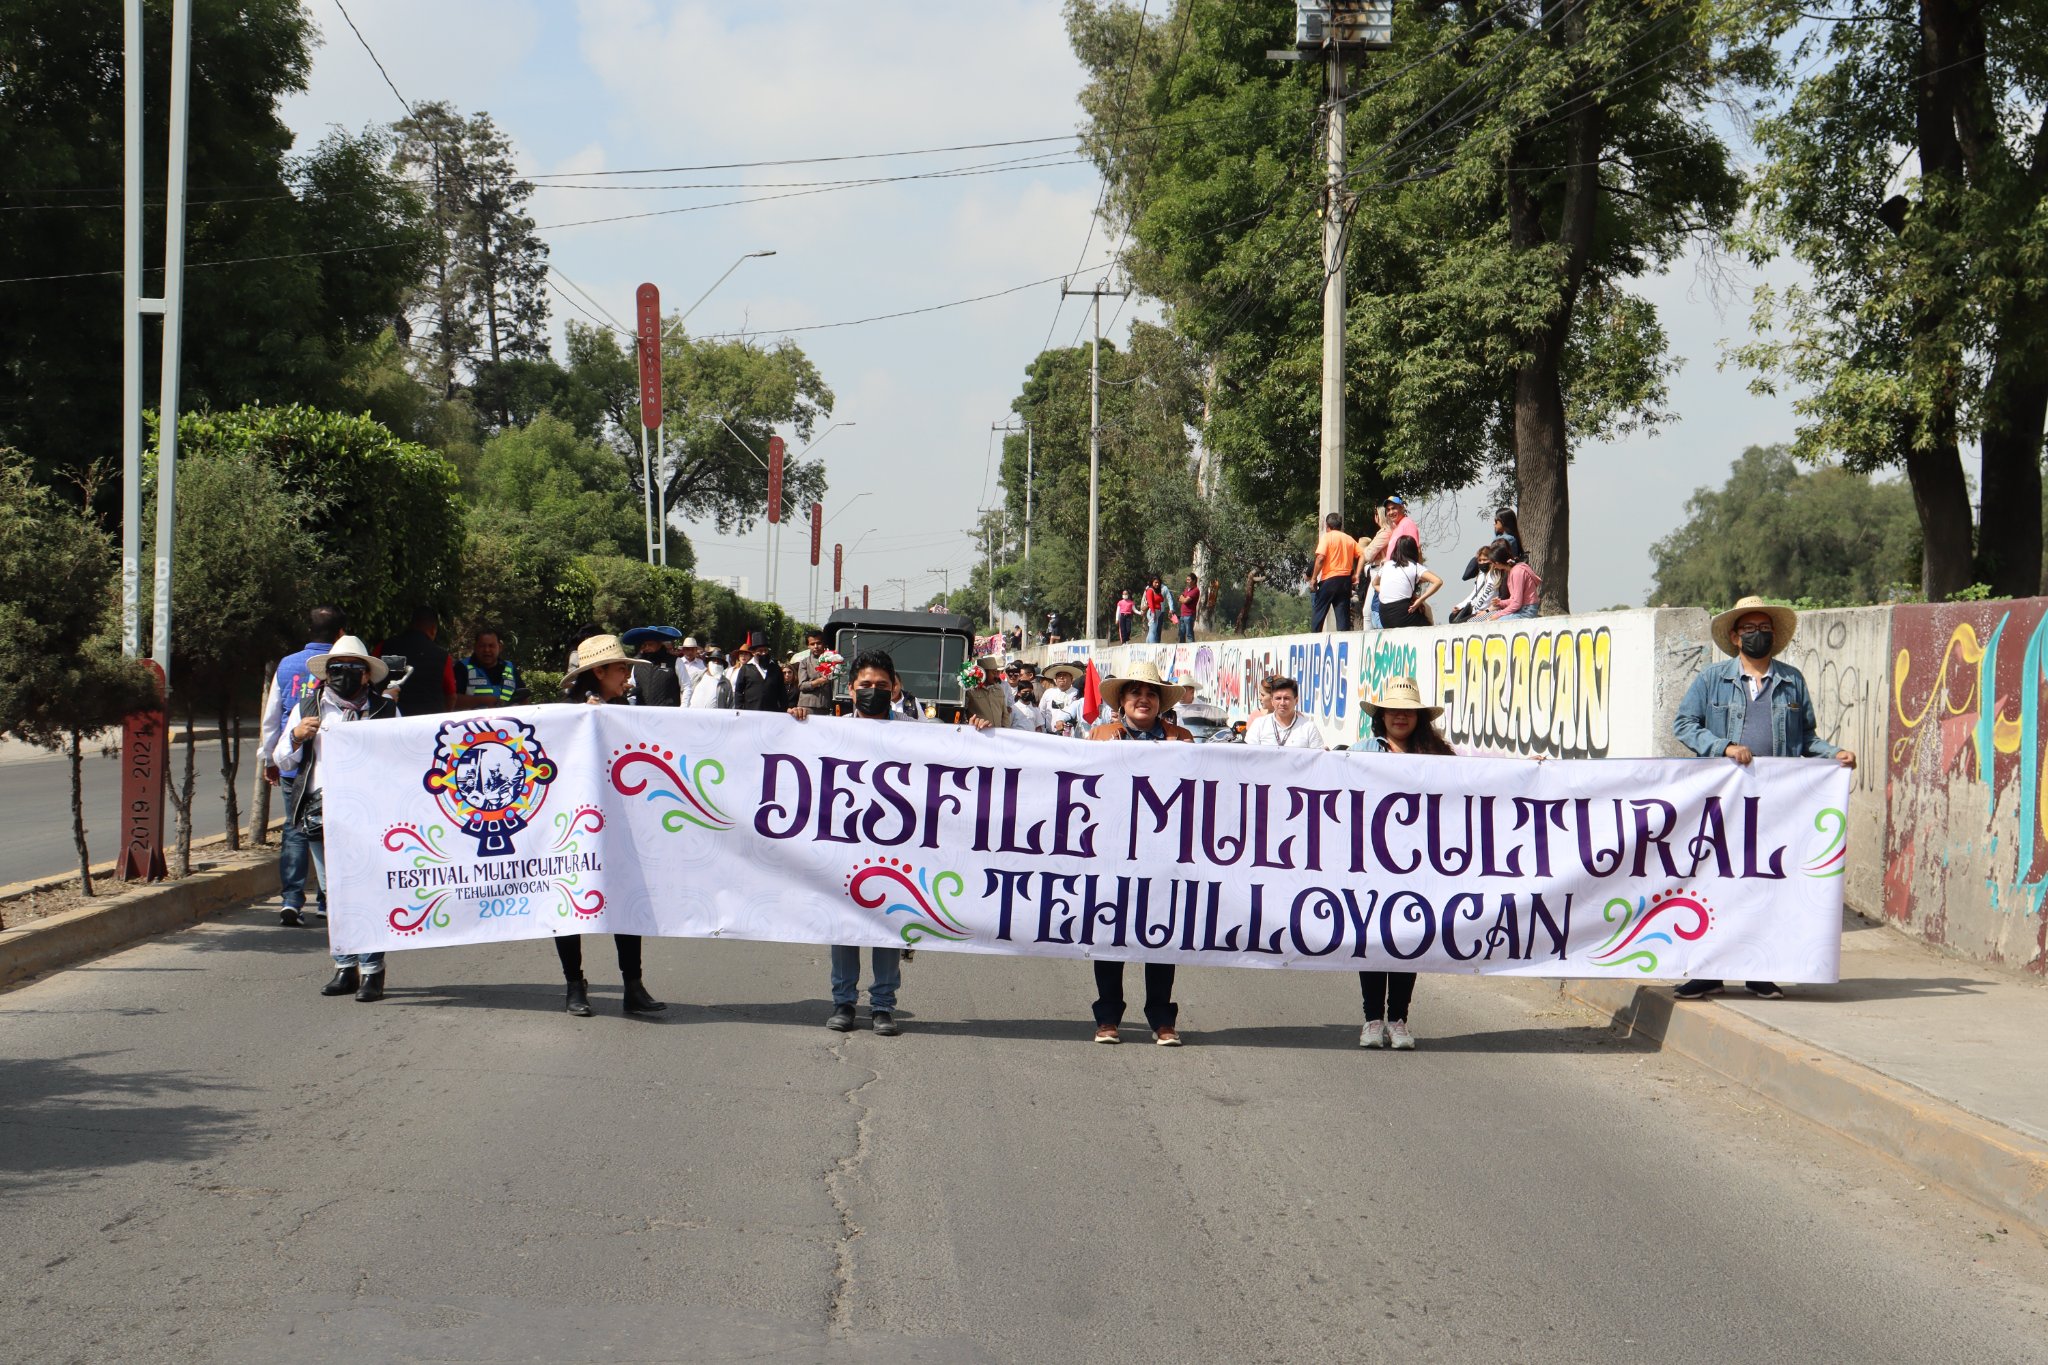 Desfile Multicultural Tehuilloyocan